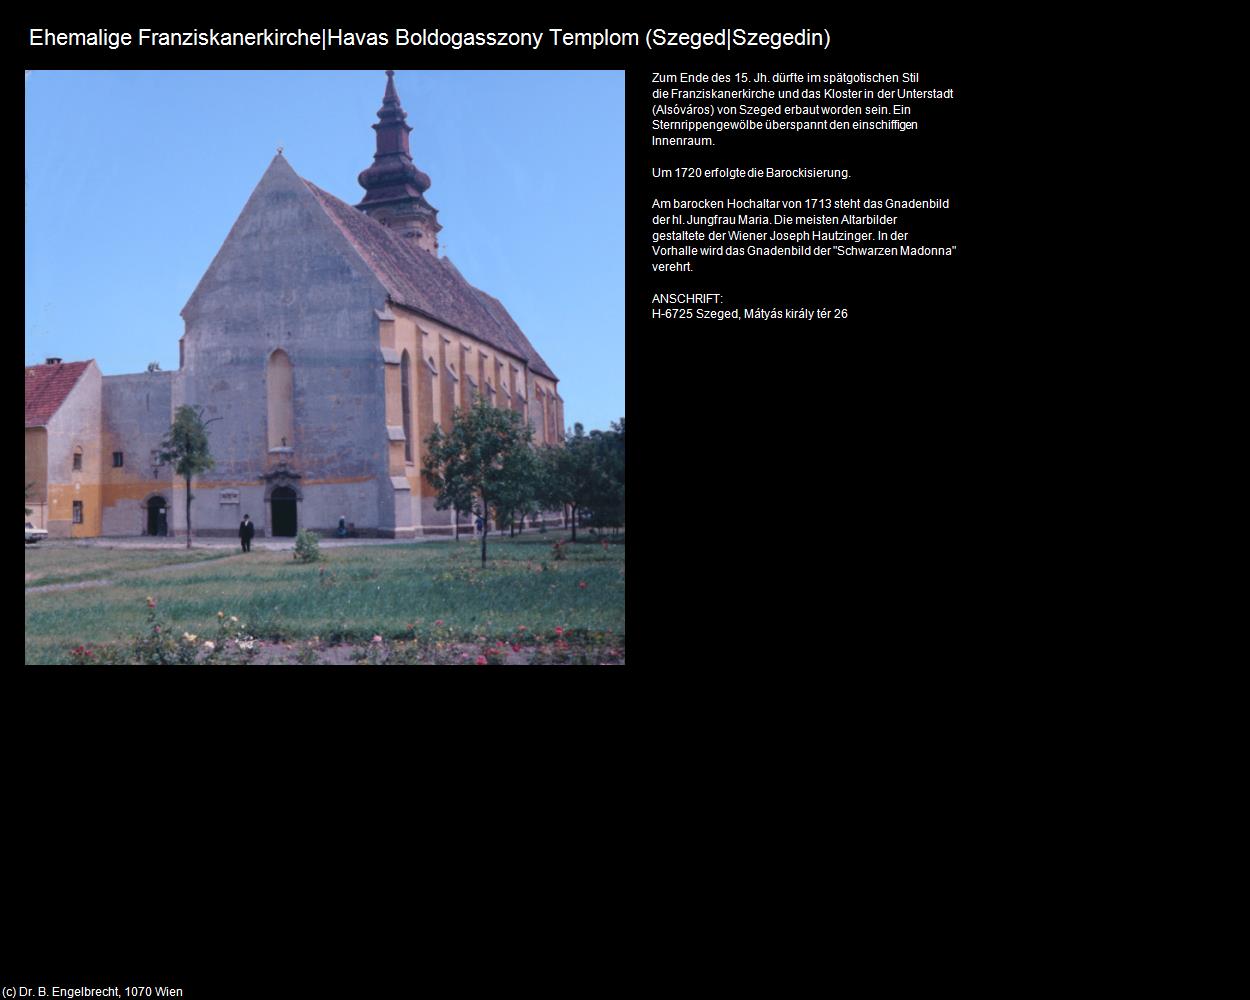 Ehem. Franziskanerkirche (Szeged|Szegedin) in UNGARN 